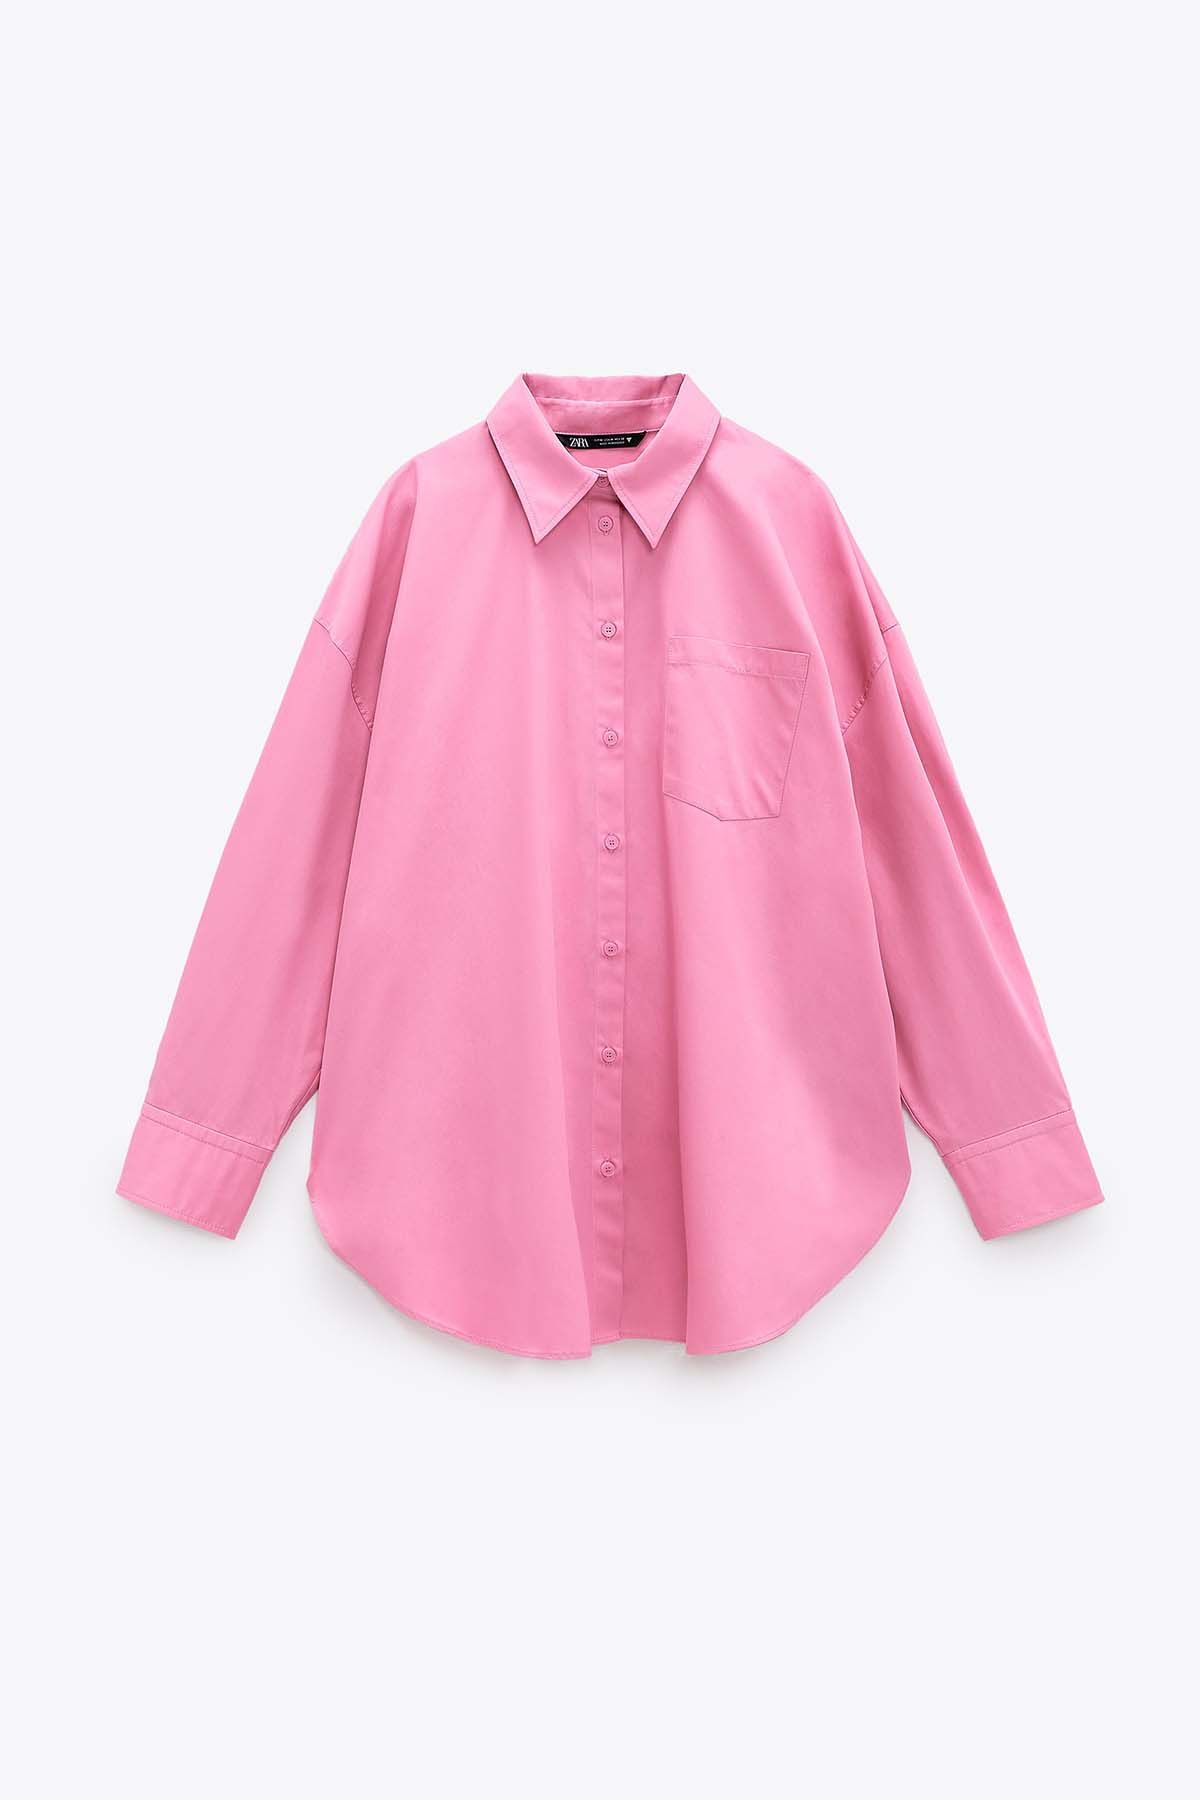 Zara tiene camisa de Zendaya y Kylie Jenner (pero barata)